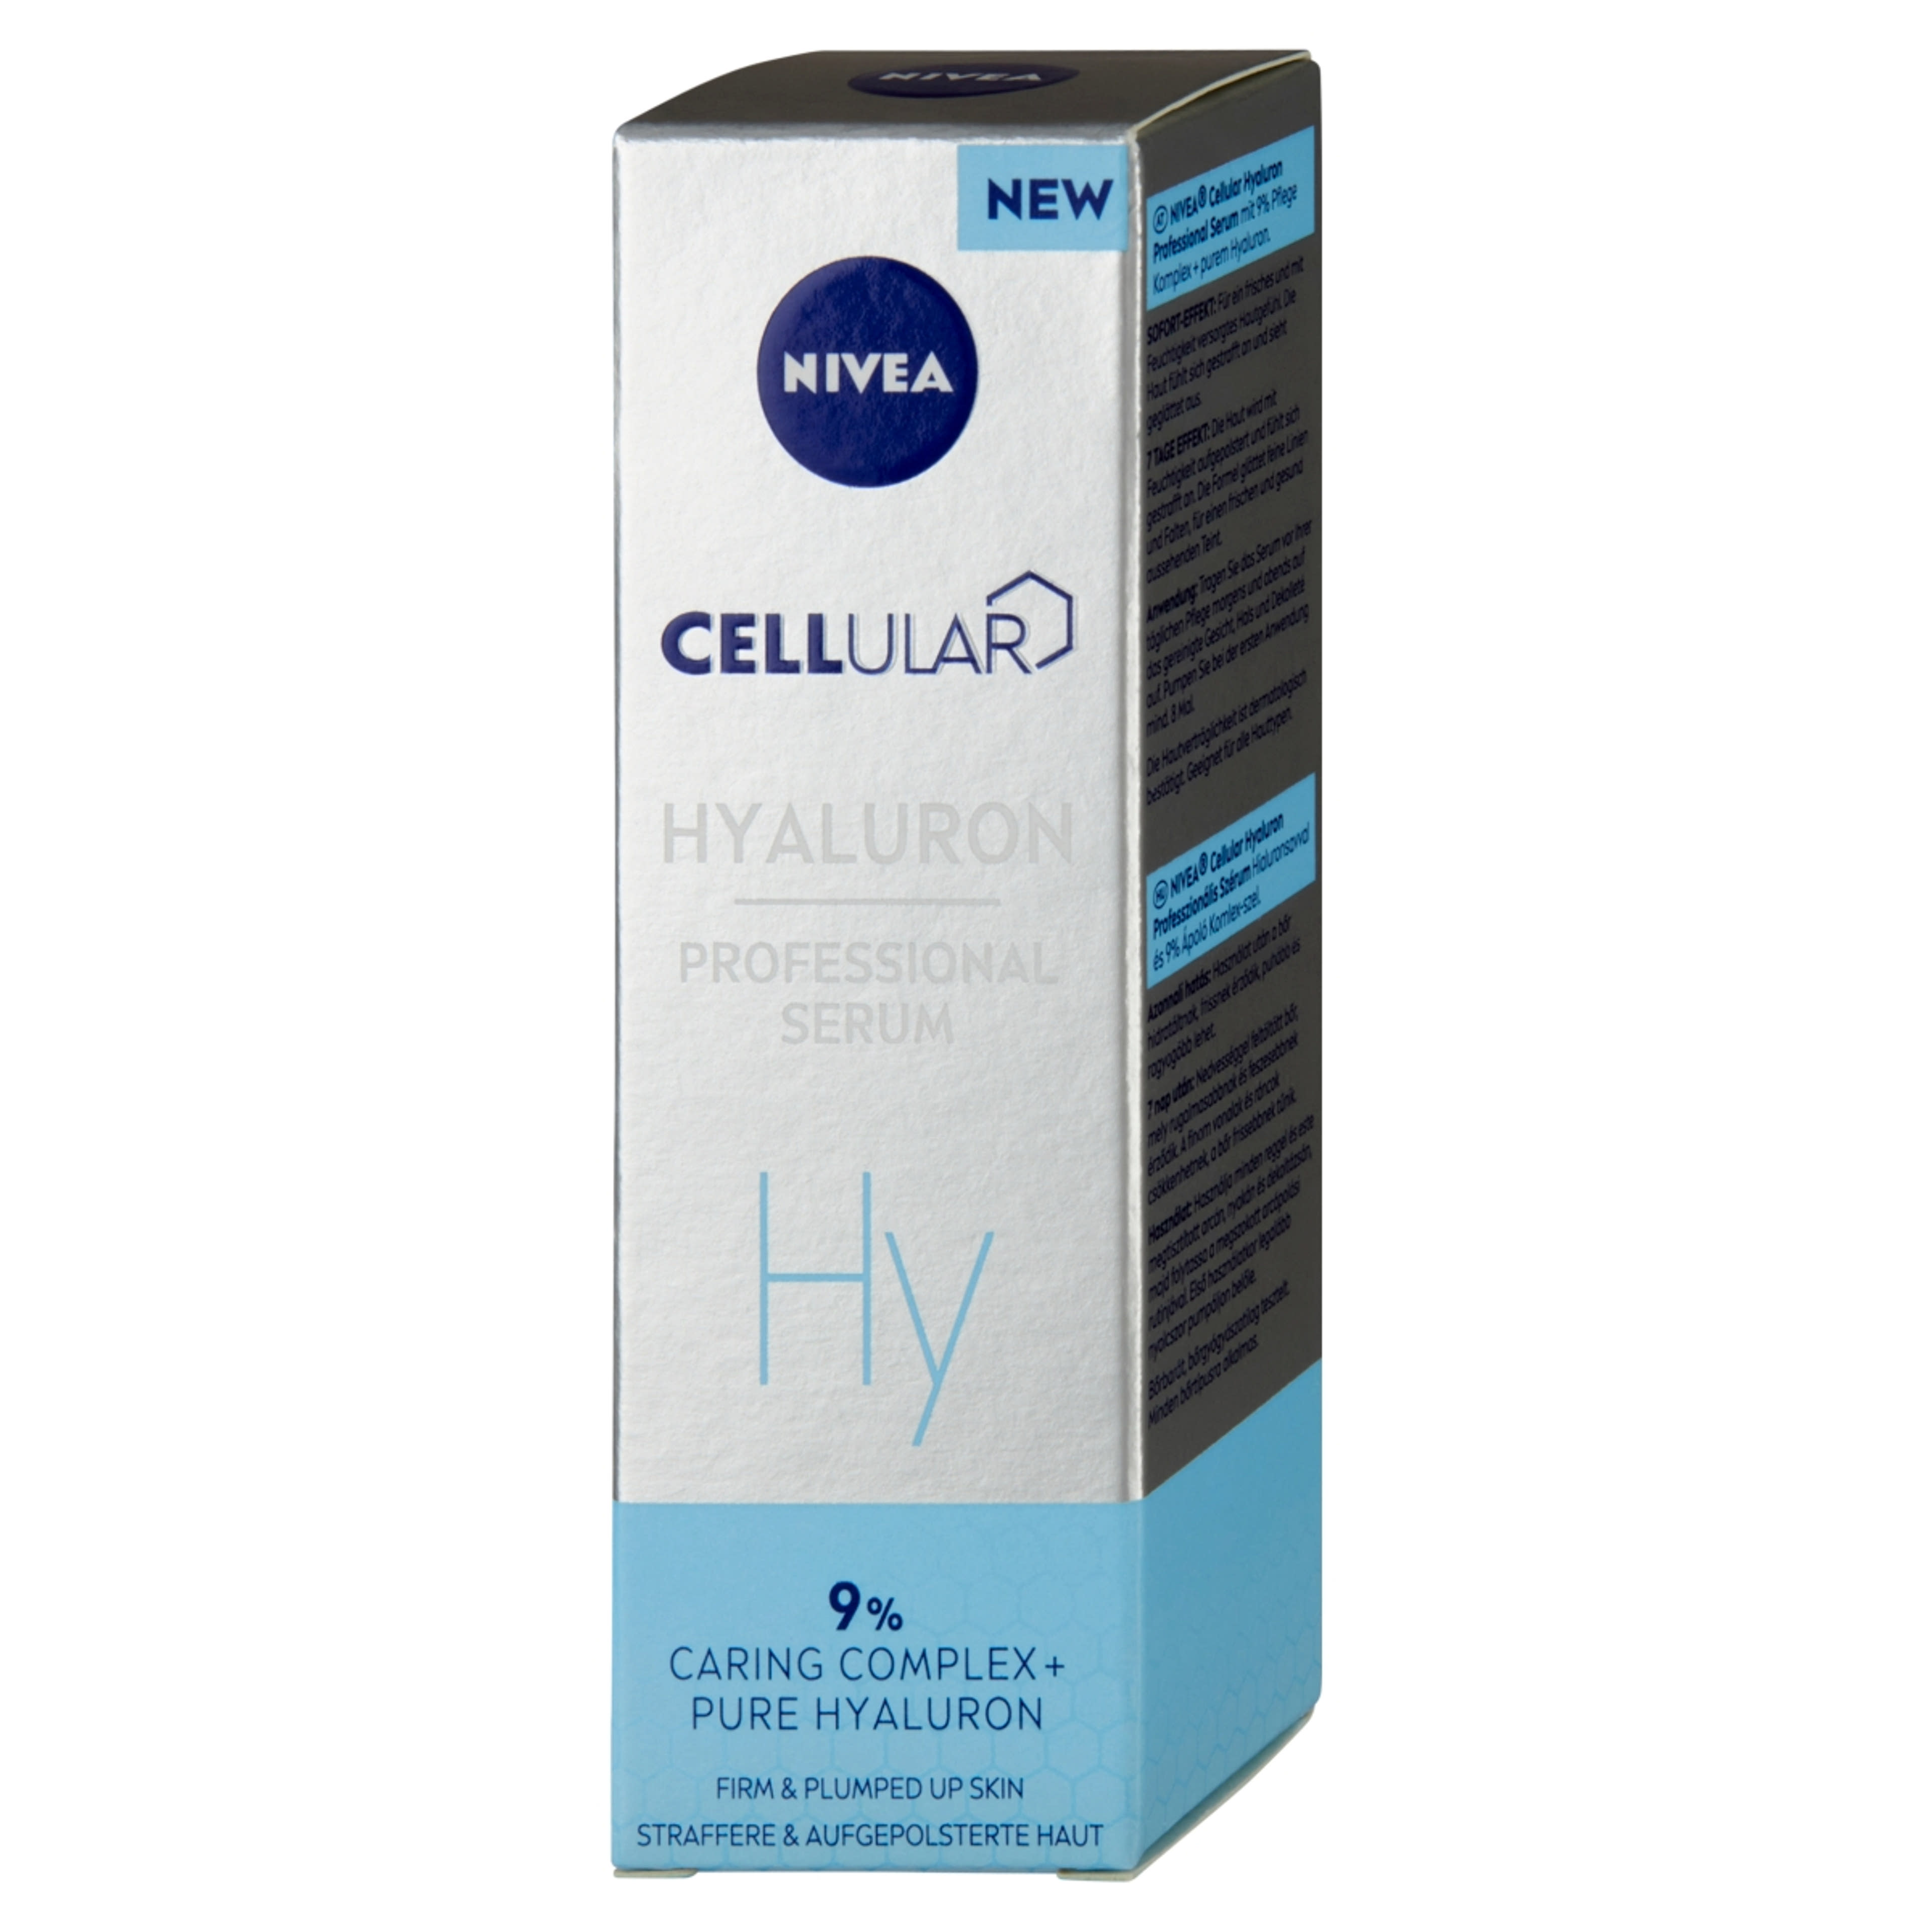 Nivea Cellular Hyaluron professzionális szérum - 30 ml-3